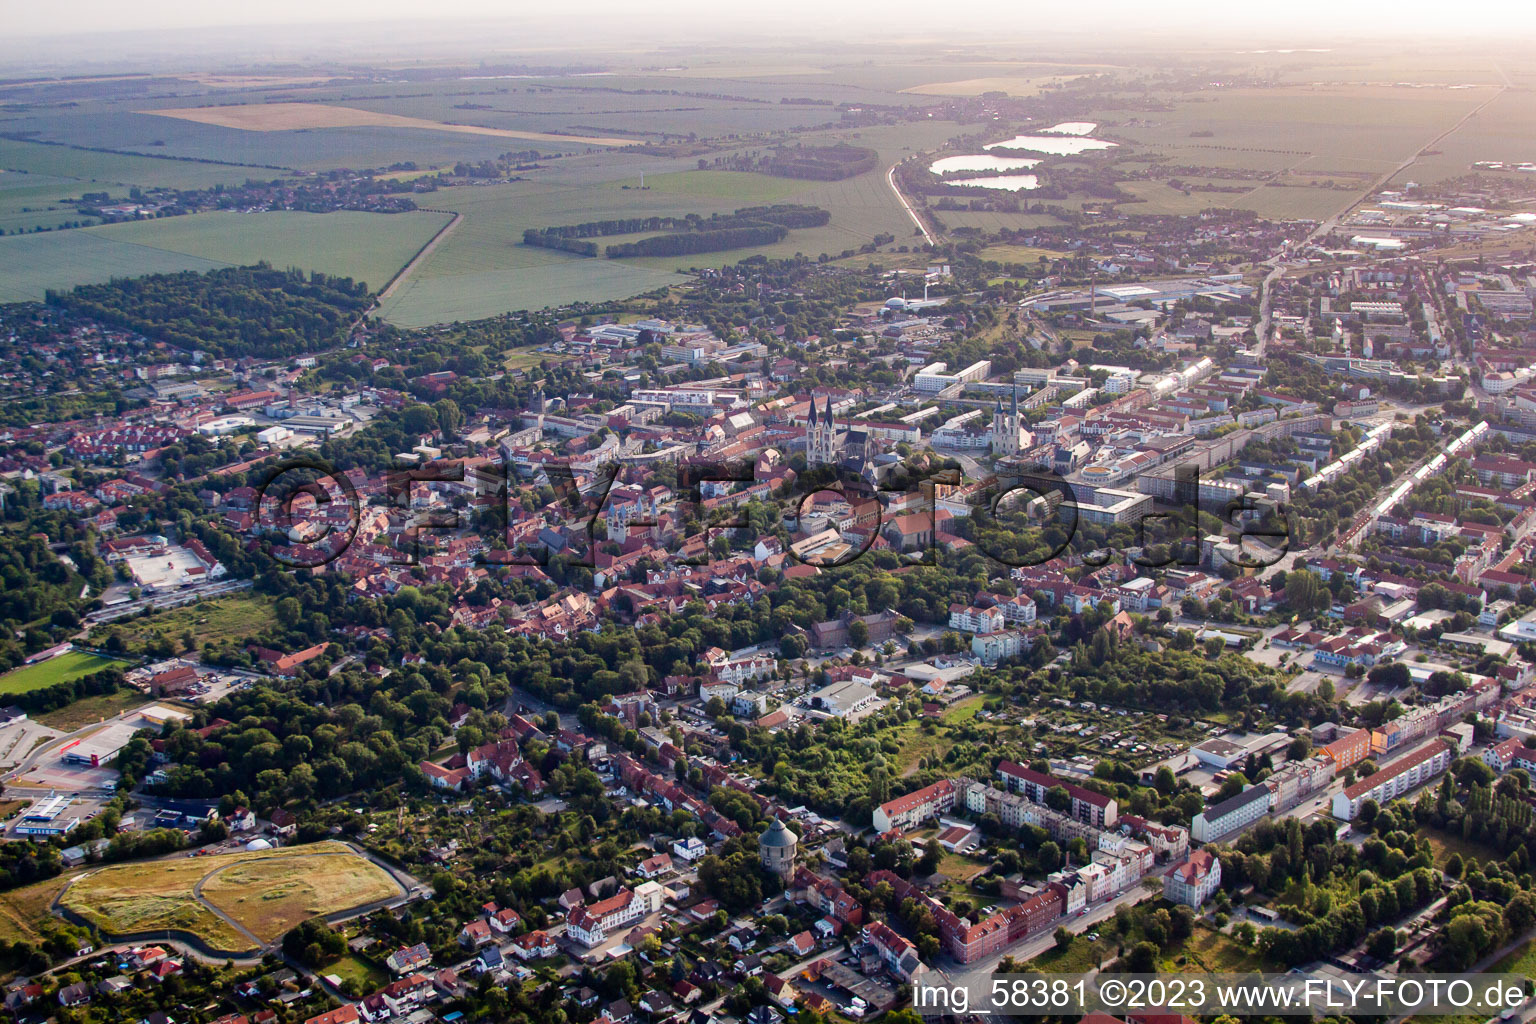 Aerial view of Westendorf in Halberstadt in the state Saxony-Anhalt, Germany